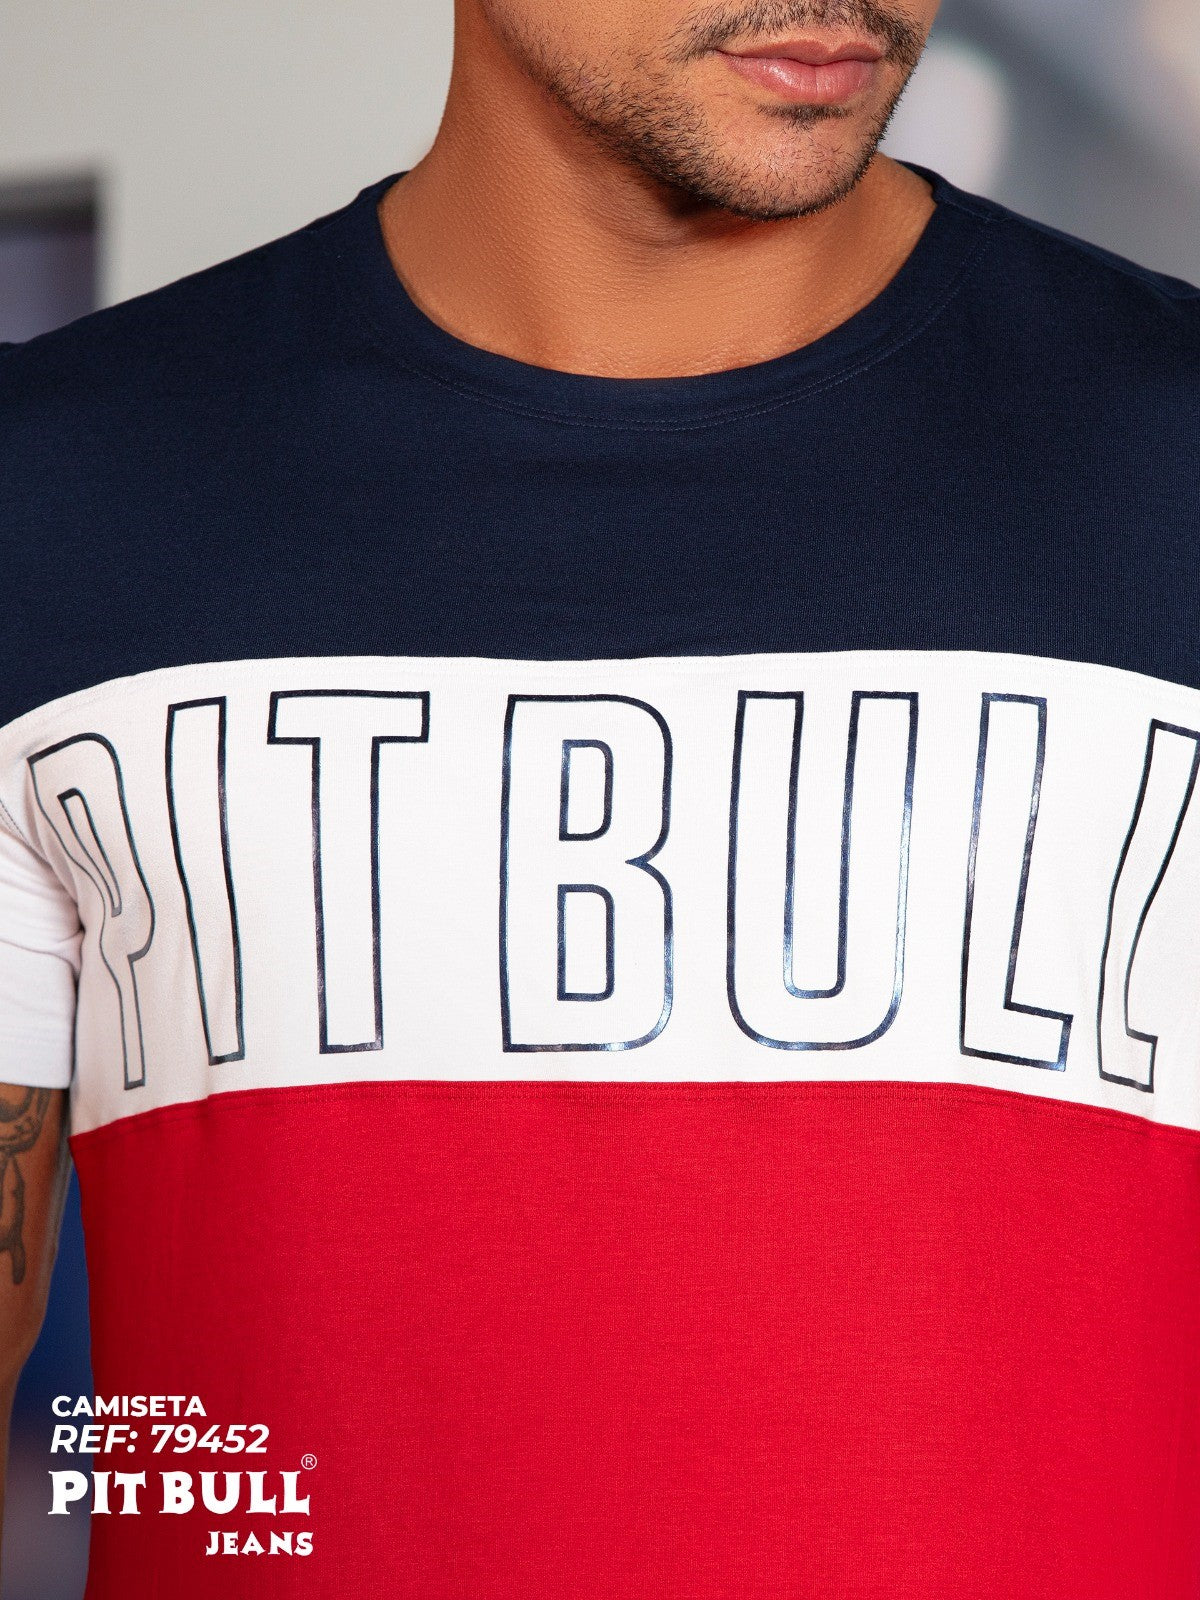 Pit Bull Jeans Men's T-Shirt 79452